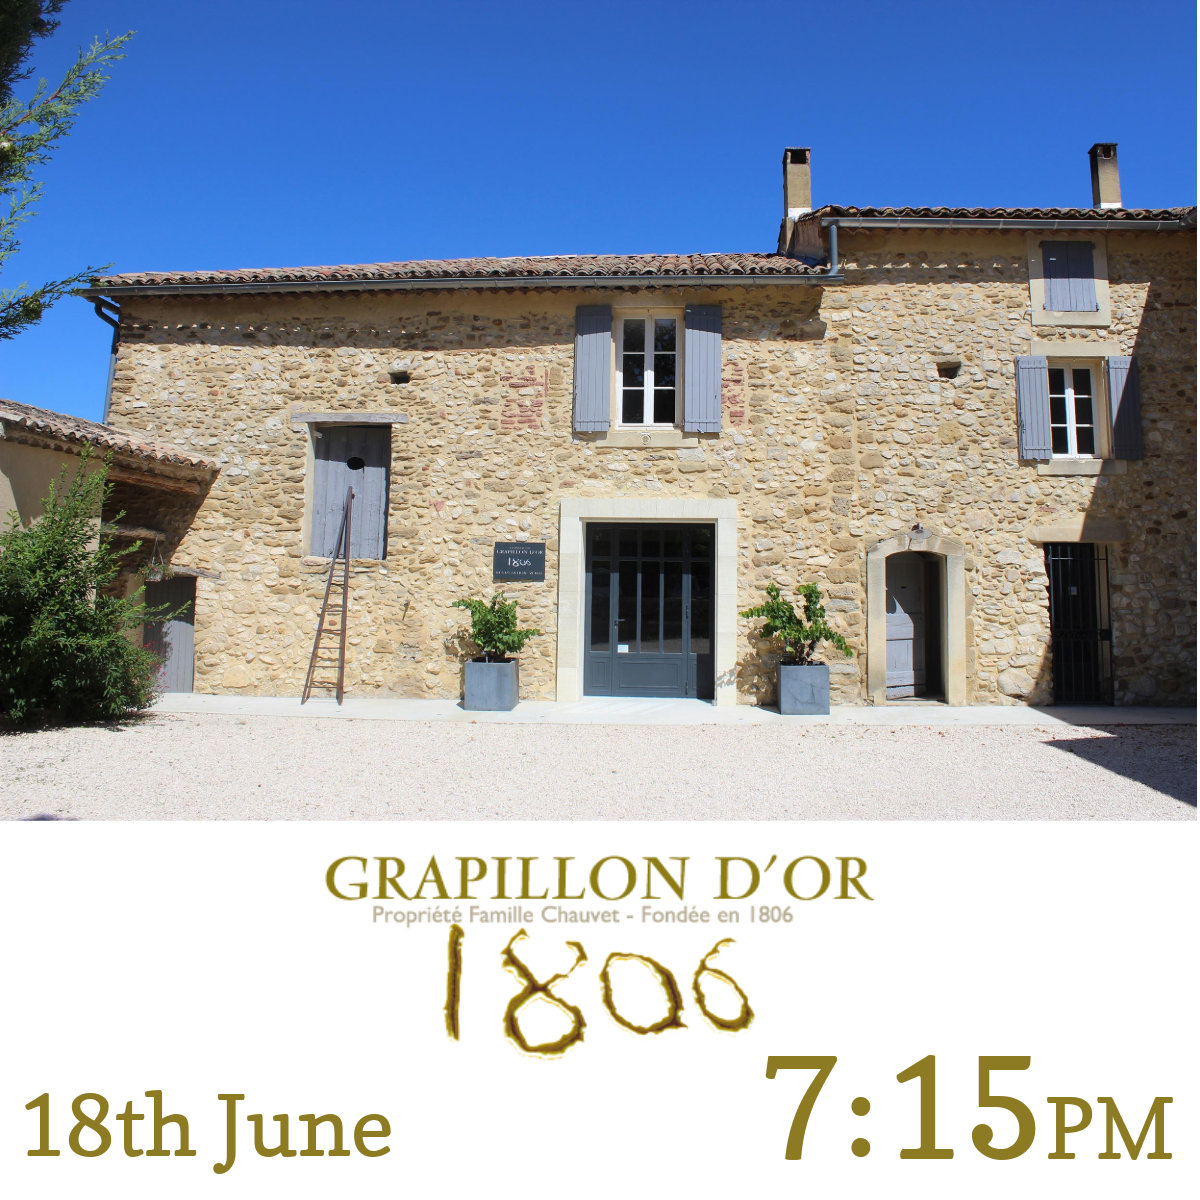 7:15-8:00pm: Meet the Winemaker: Grapillon d'Or